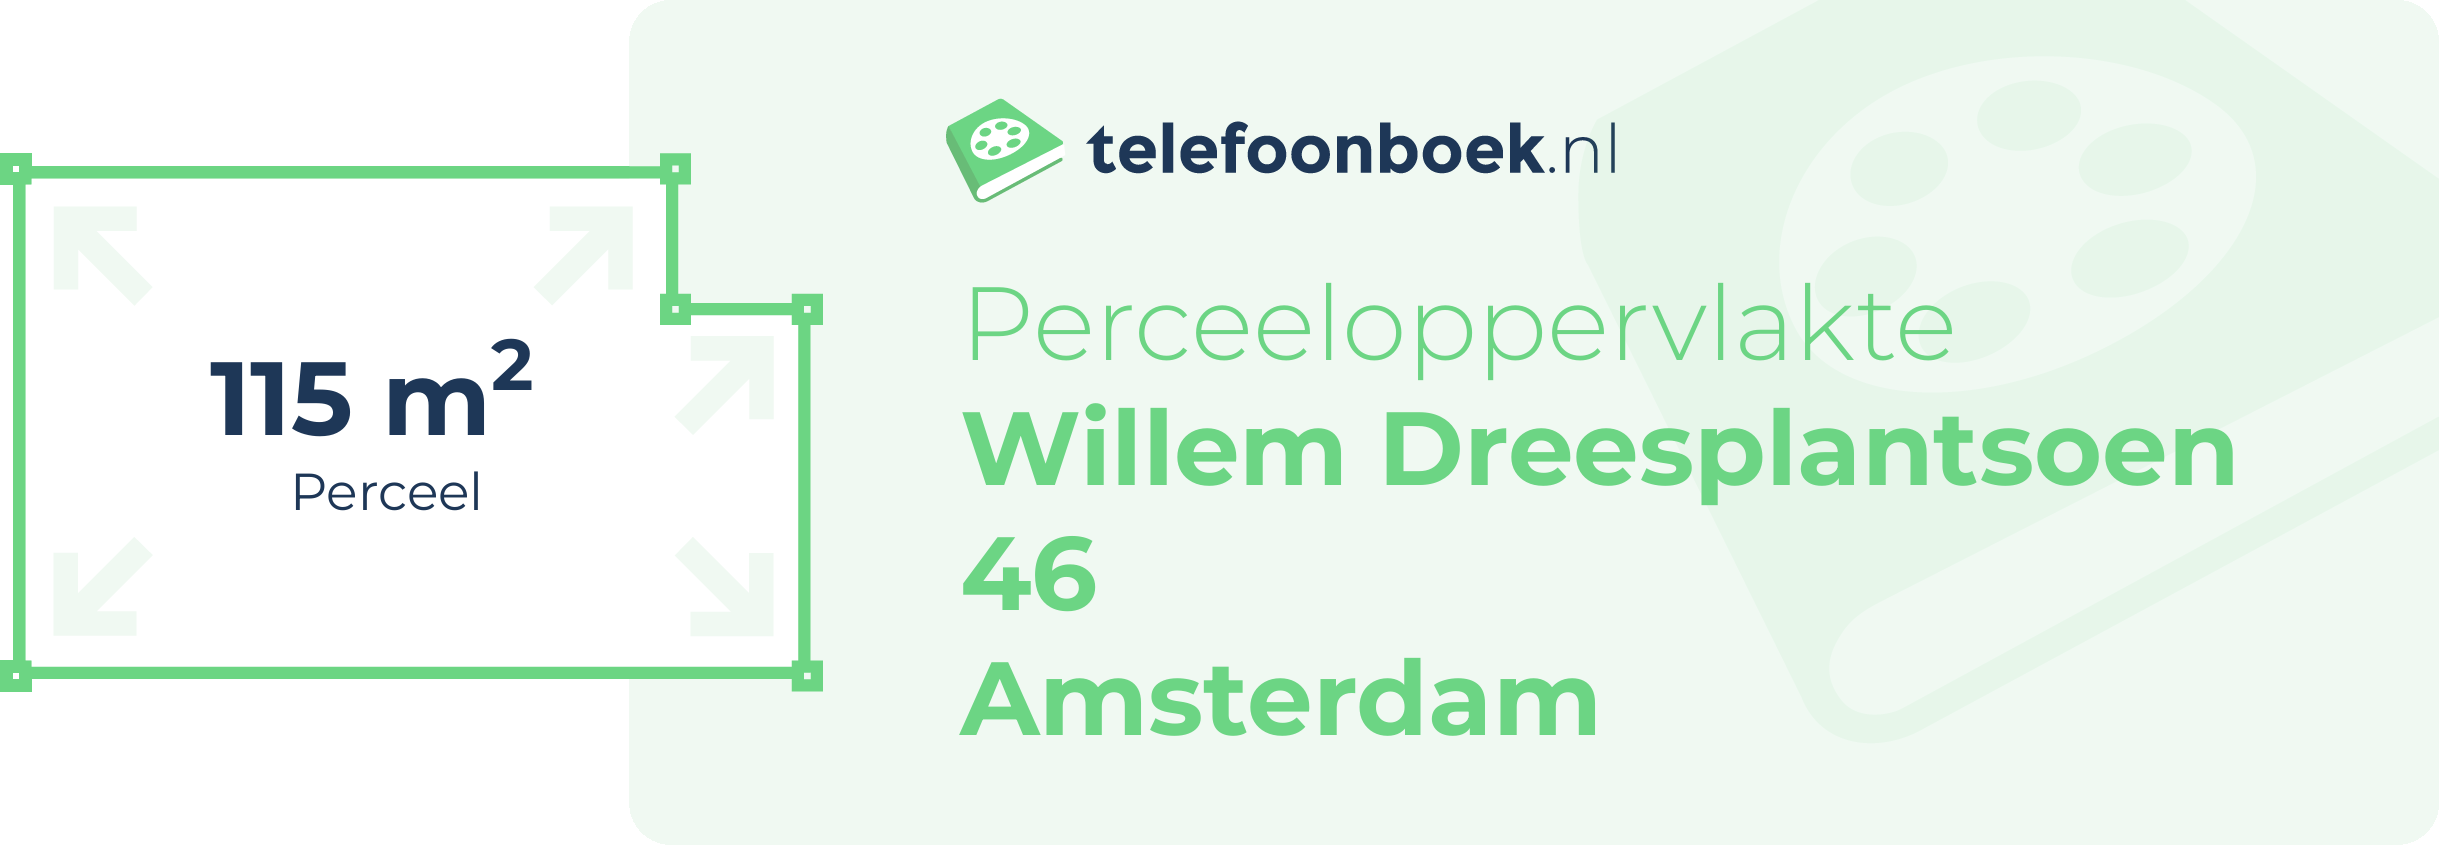 Perceeloppervlakte Willem Dreesplantsoen 46 Amsterdam